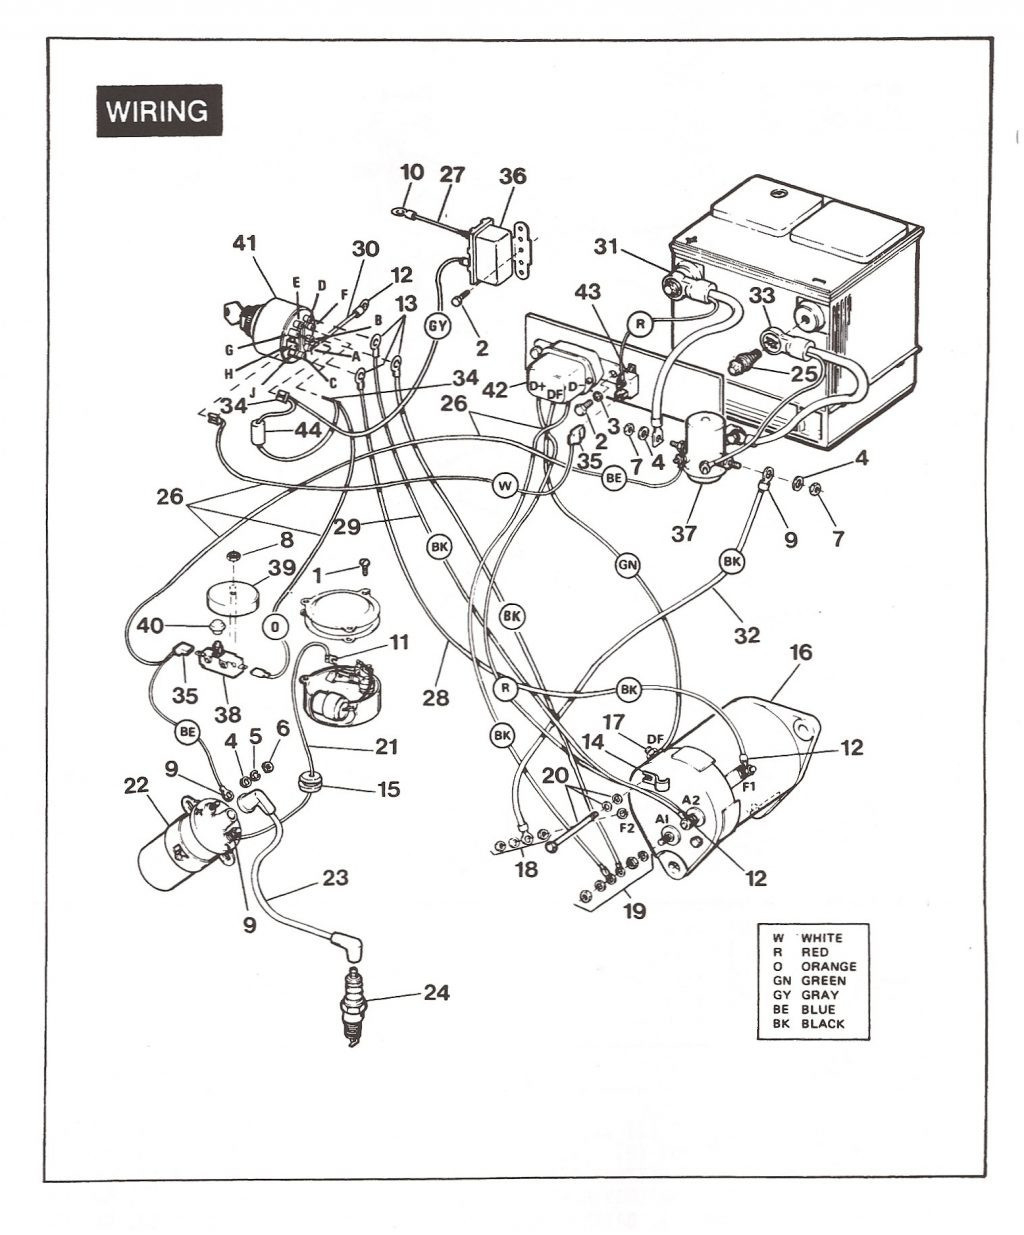 98 Ez Go Wiring Diagram Pdf | Wiring Diagram - Ez Go Golf Cart Wiring Diagram Pdf